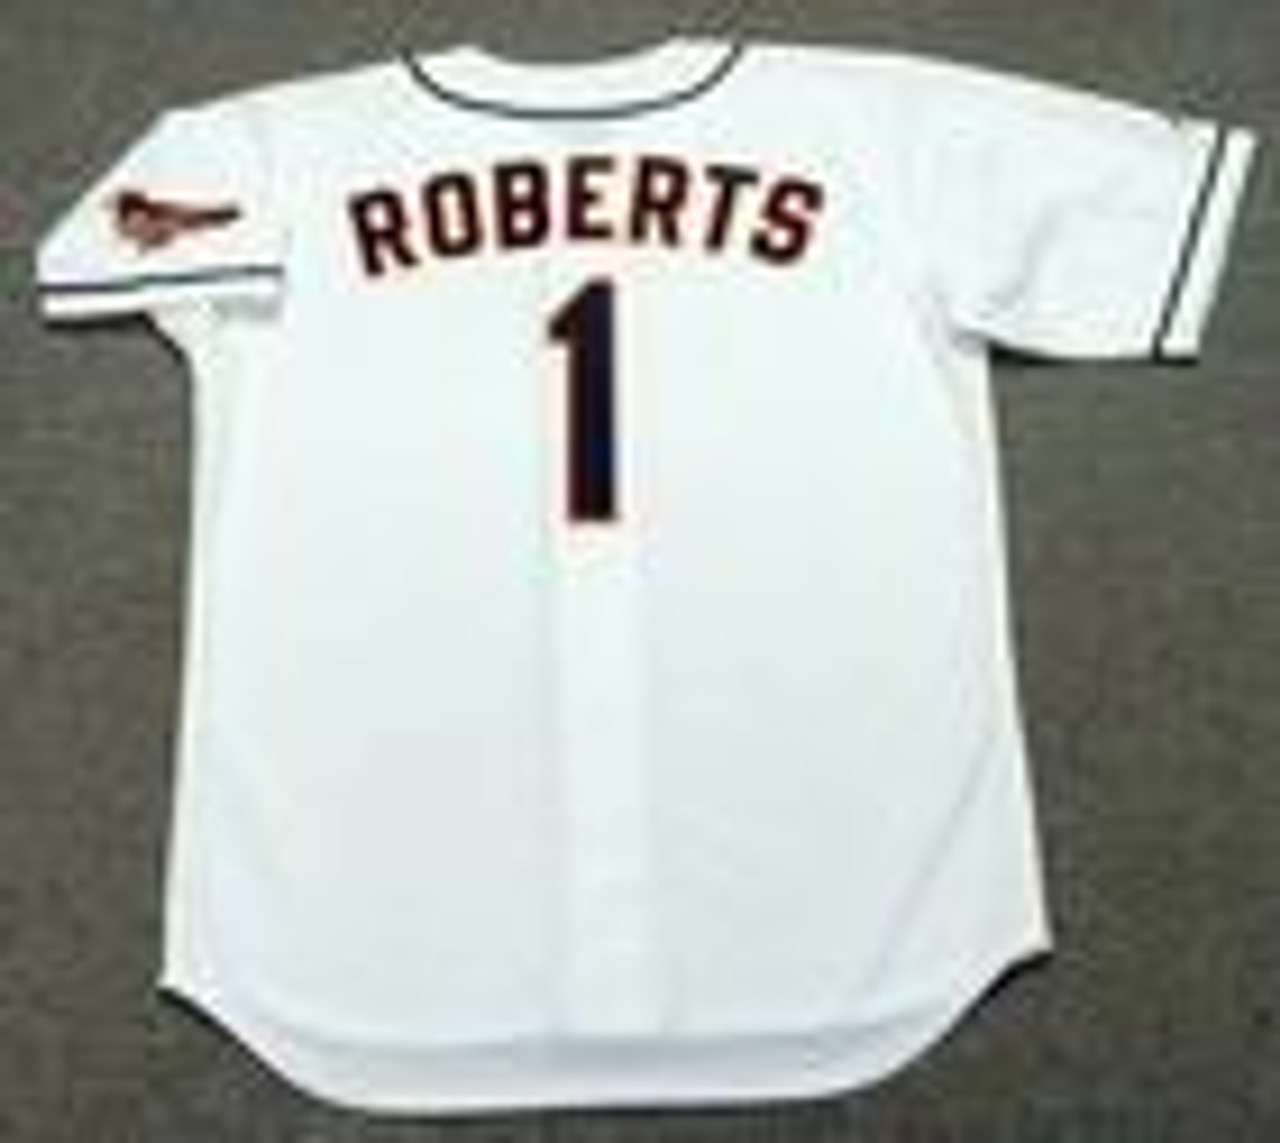 Brian Roberts Jersey - Baltimore Orioles 2001 Throwback MLB Baseball Jersey